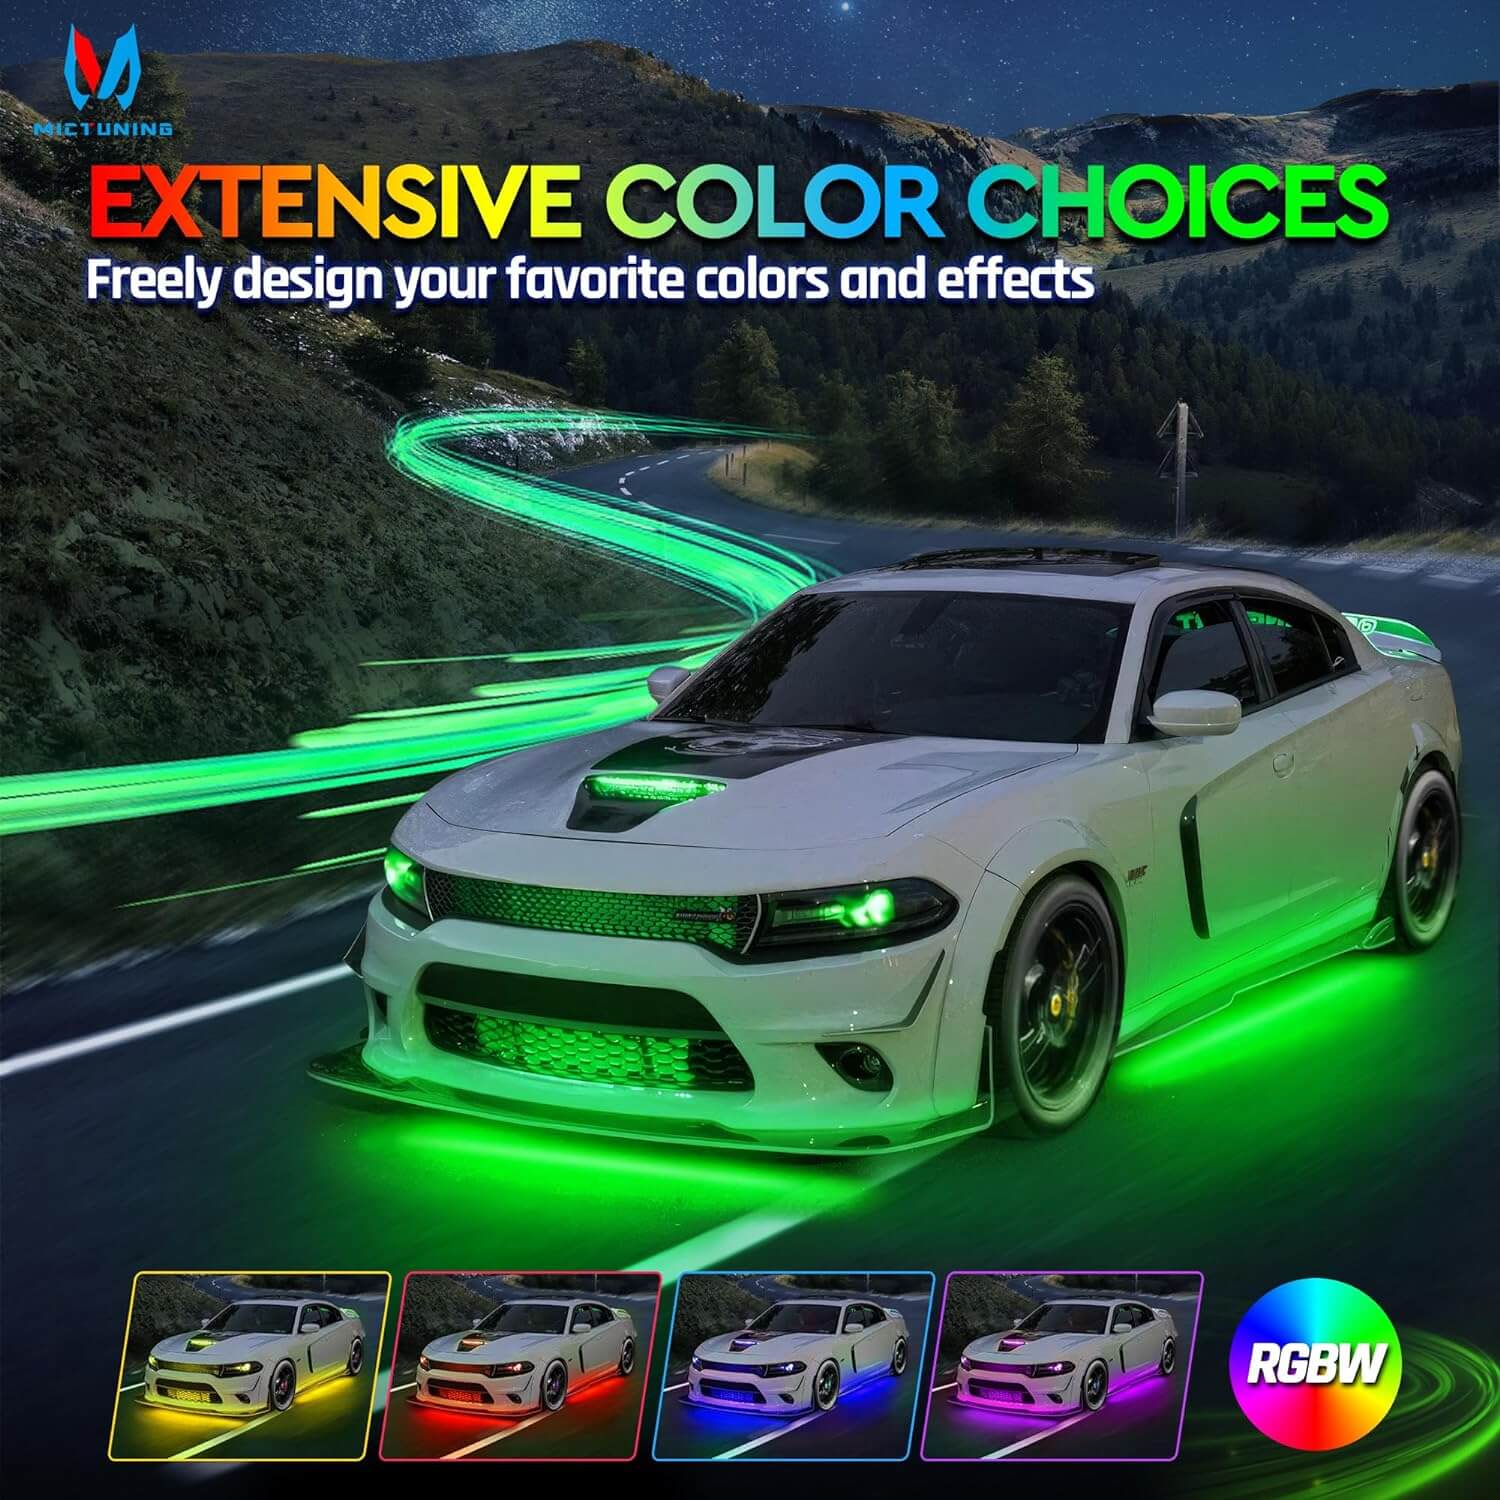 N8 RGBW LED Car Underglow Light Kit Bundle with C2 RGBW LED Rock Lights